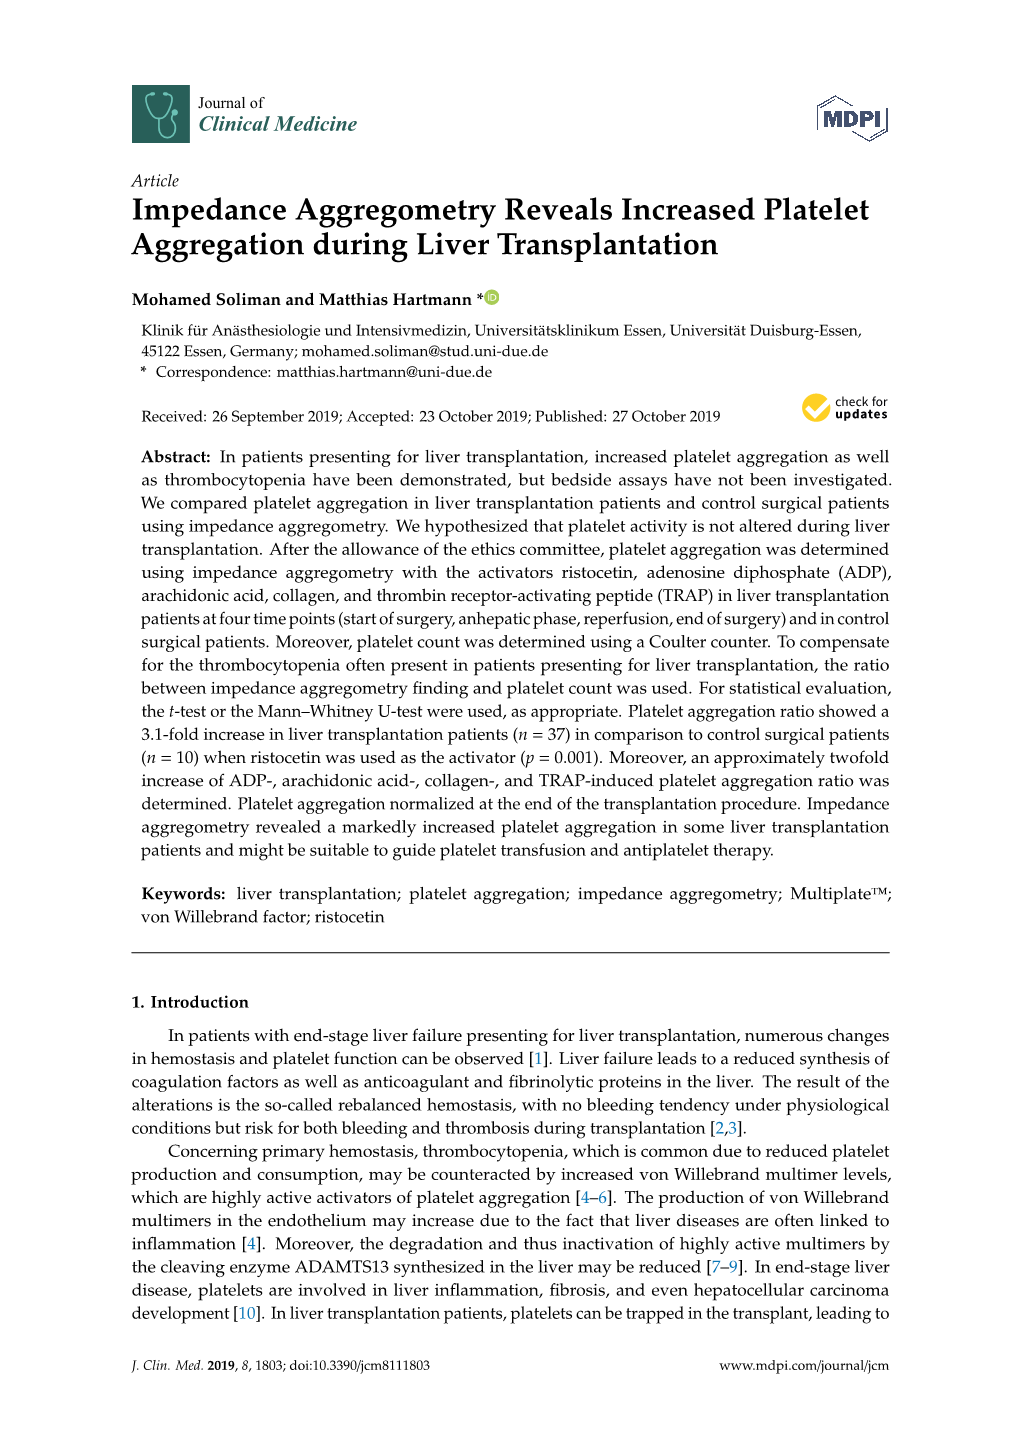 Impedance Aggregometry Reveals Increased Platelet Aggregation During Liver Transplantation